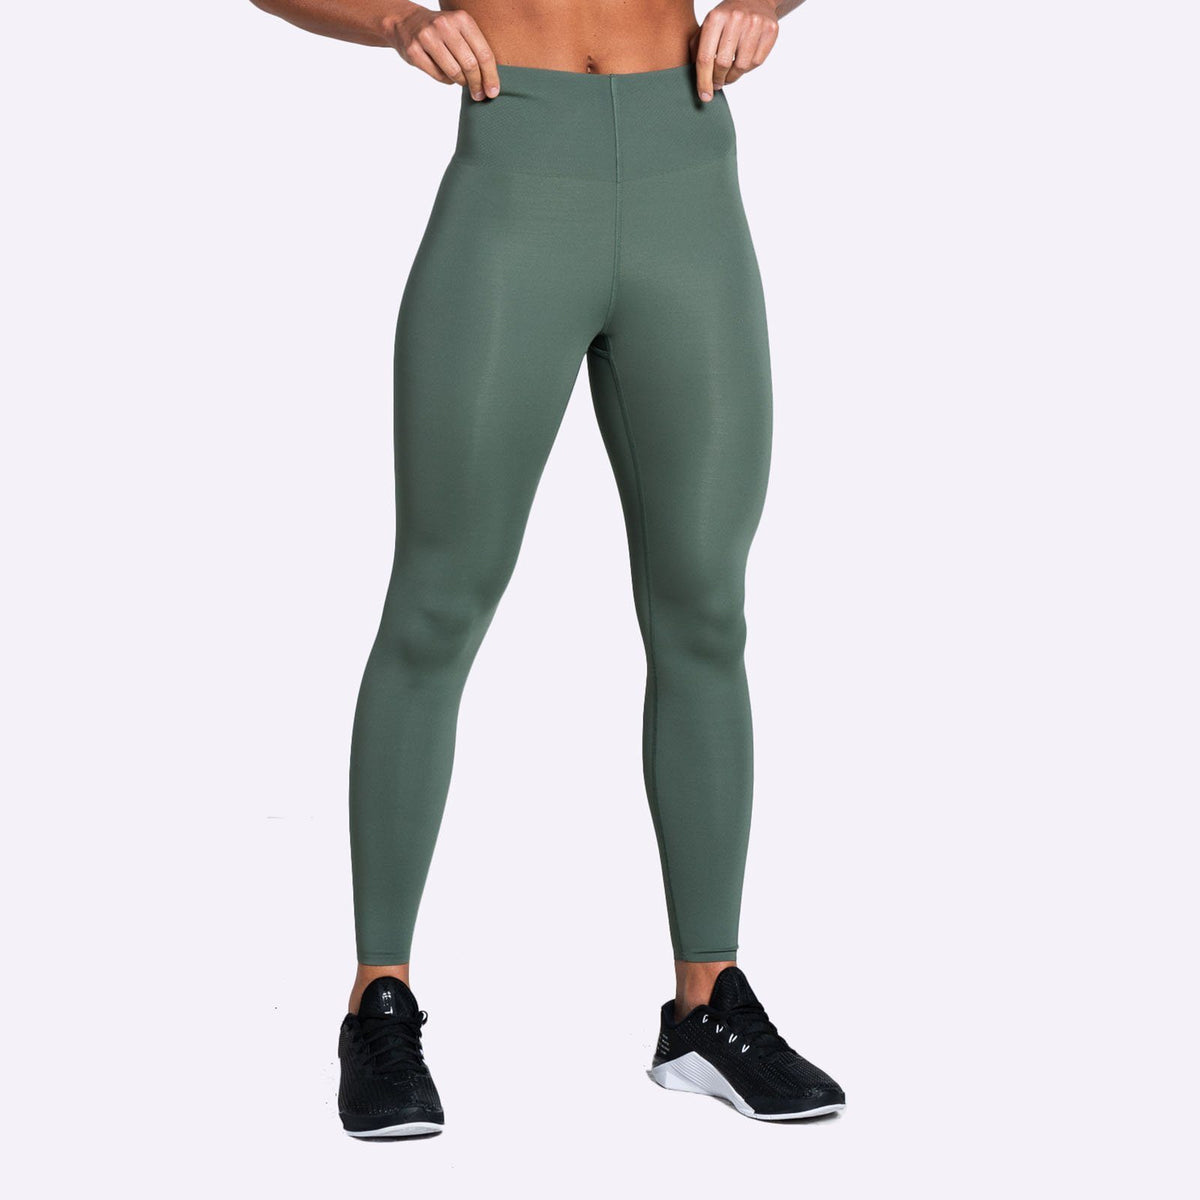 One Luxe Dri-FIT stretch leggings